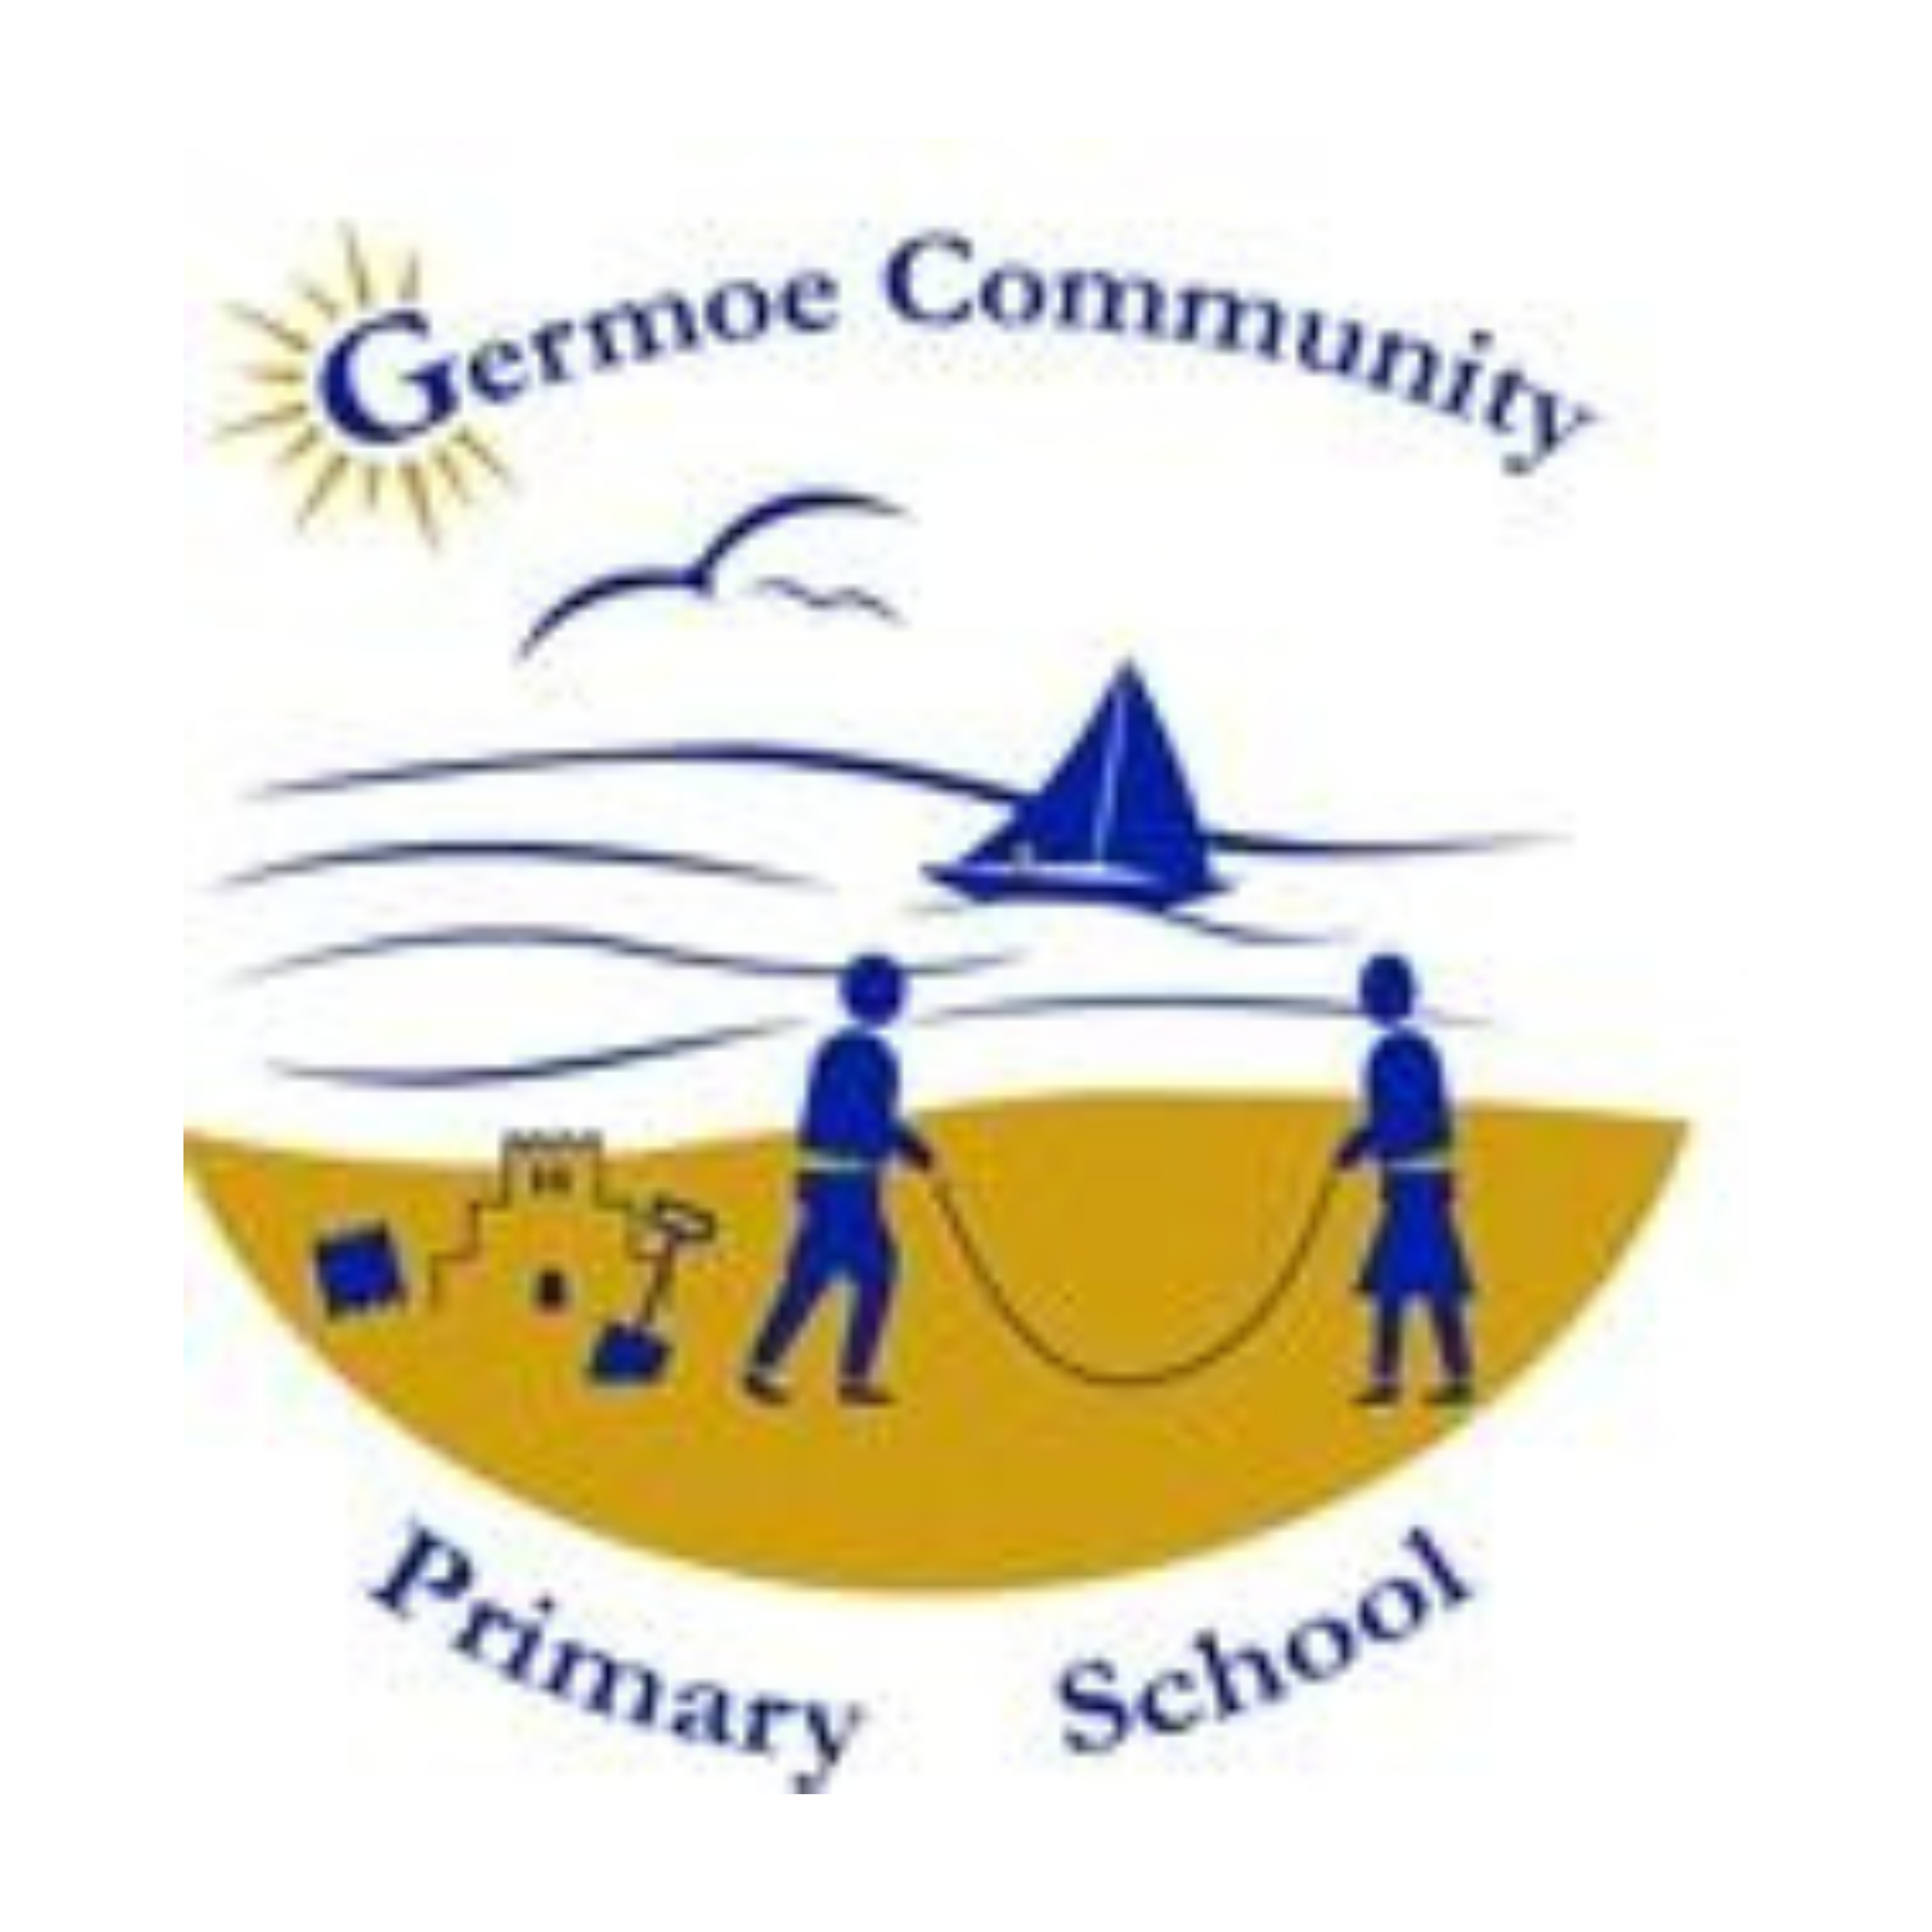 Germoe Community Primary School